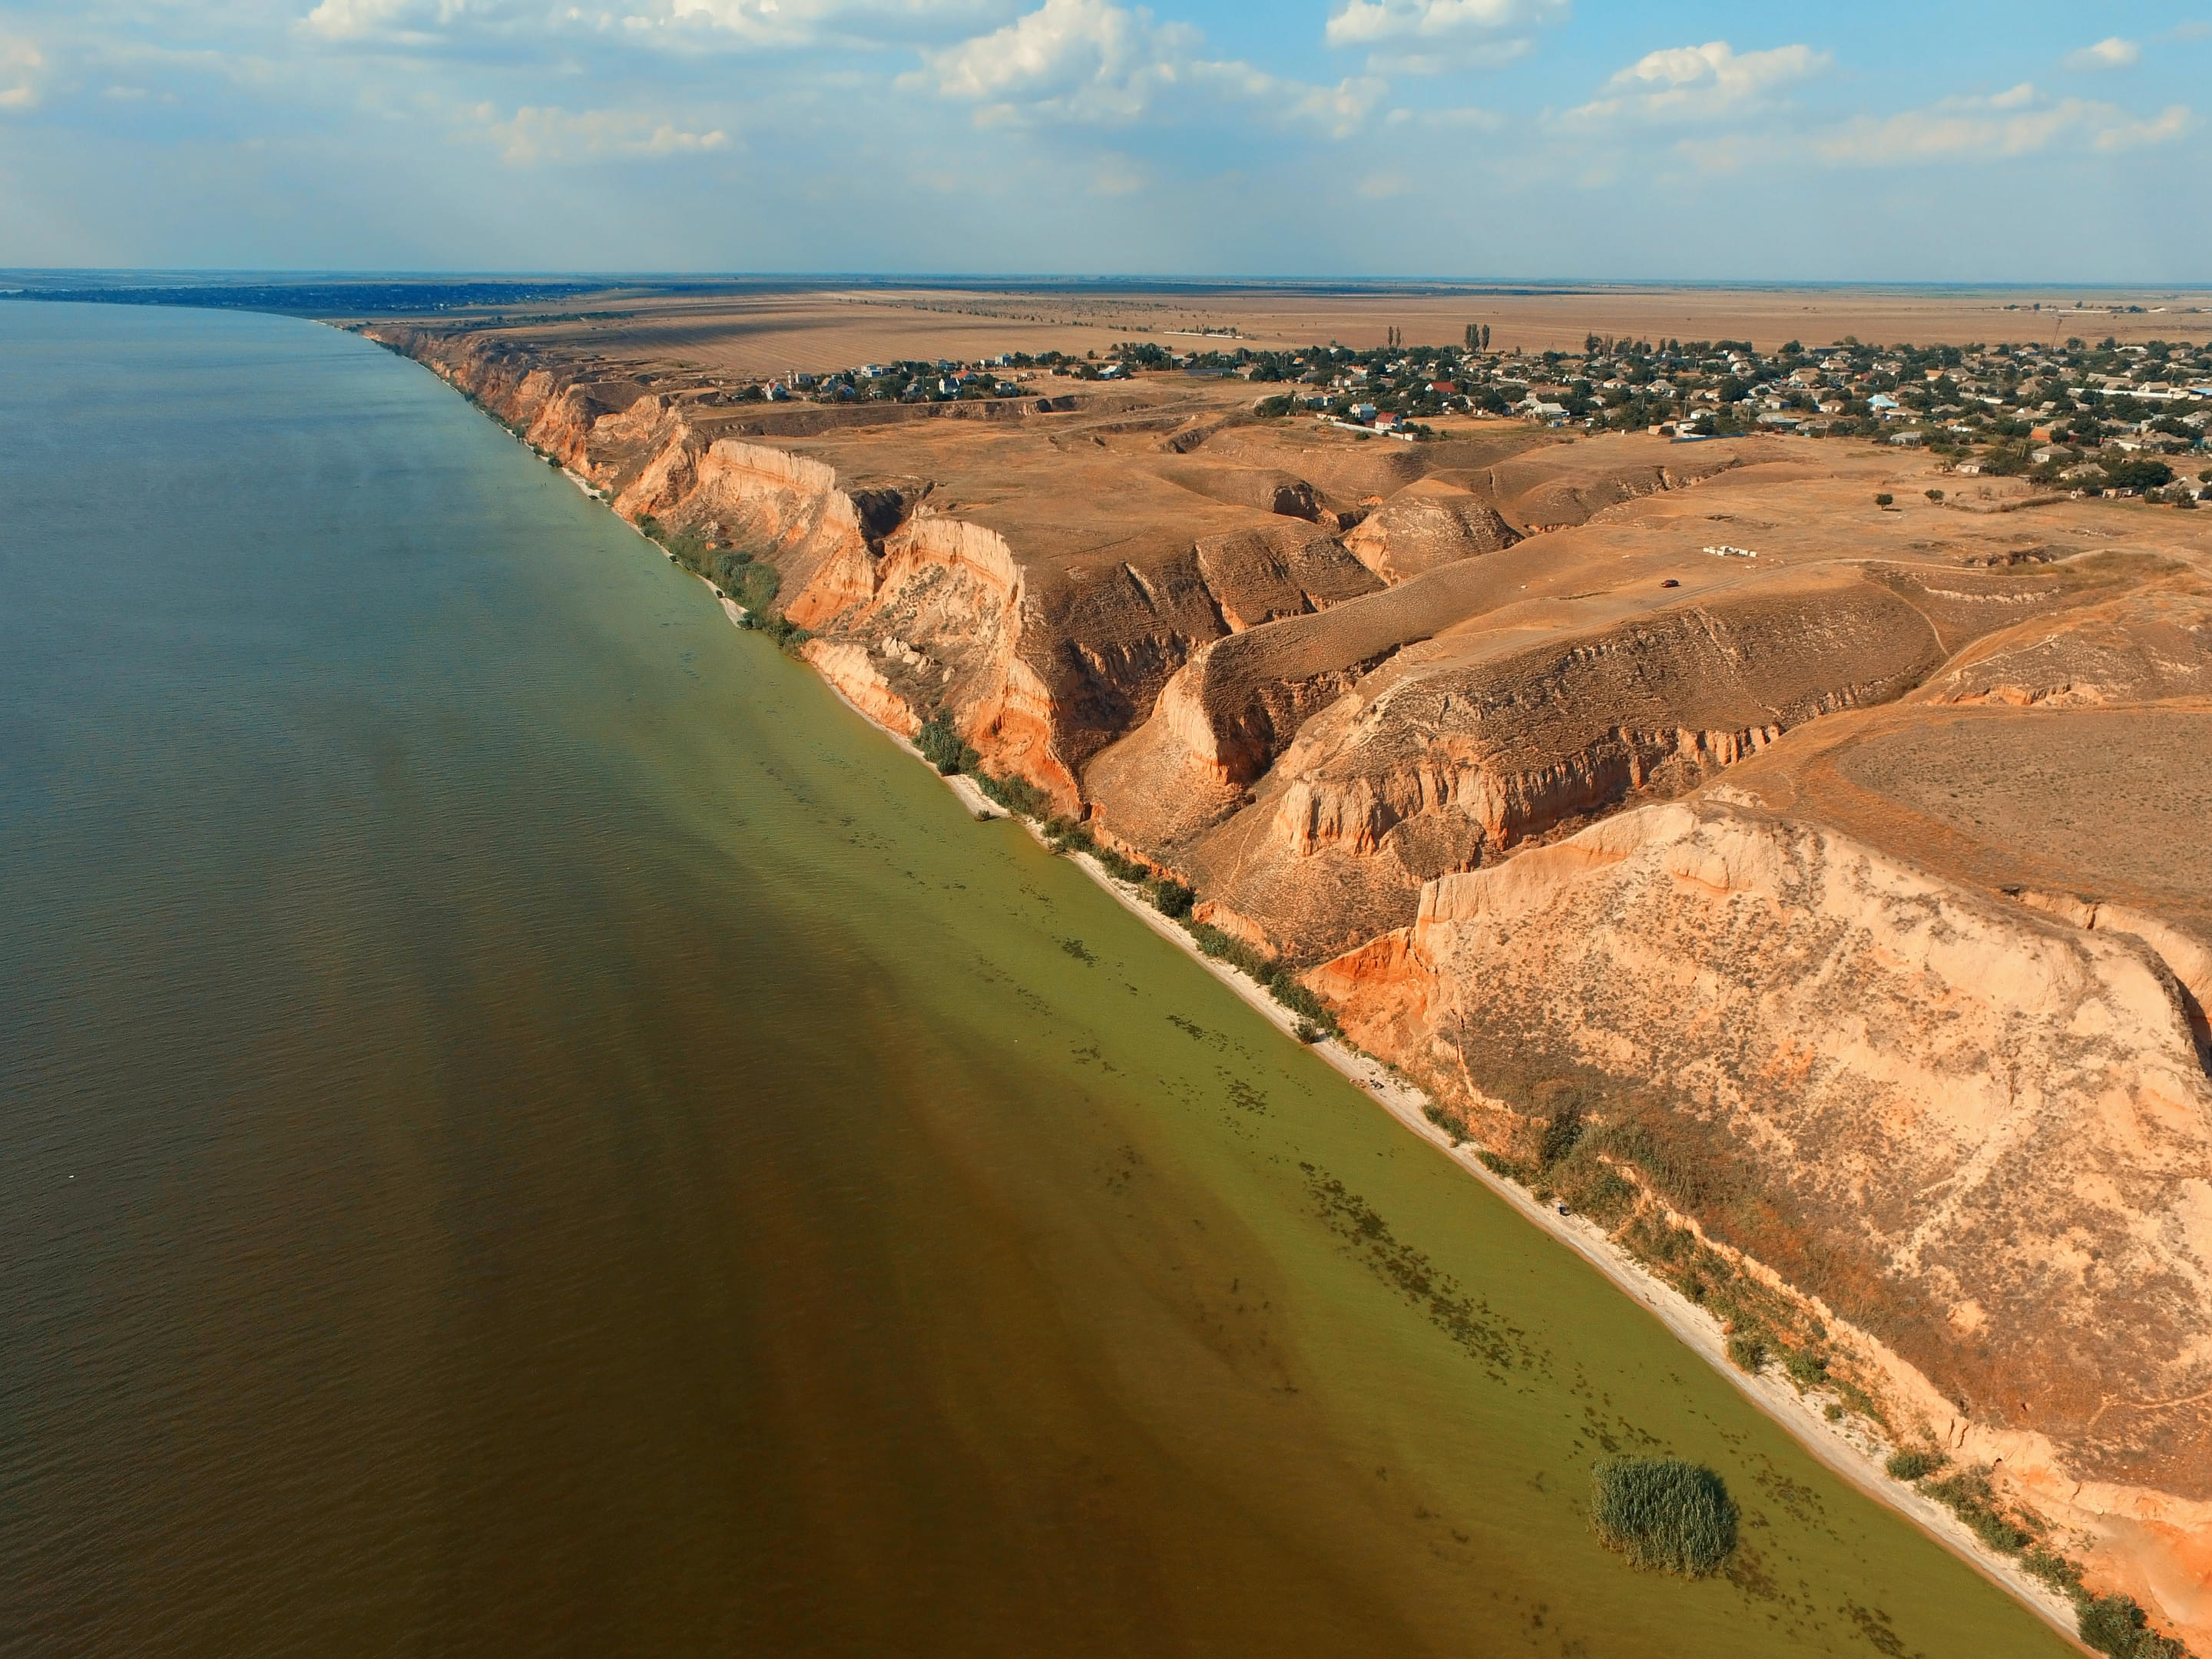 Kherson Cliffs Overview